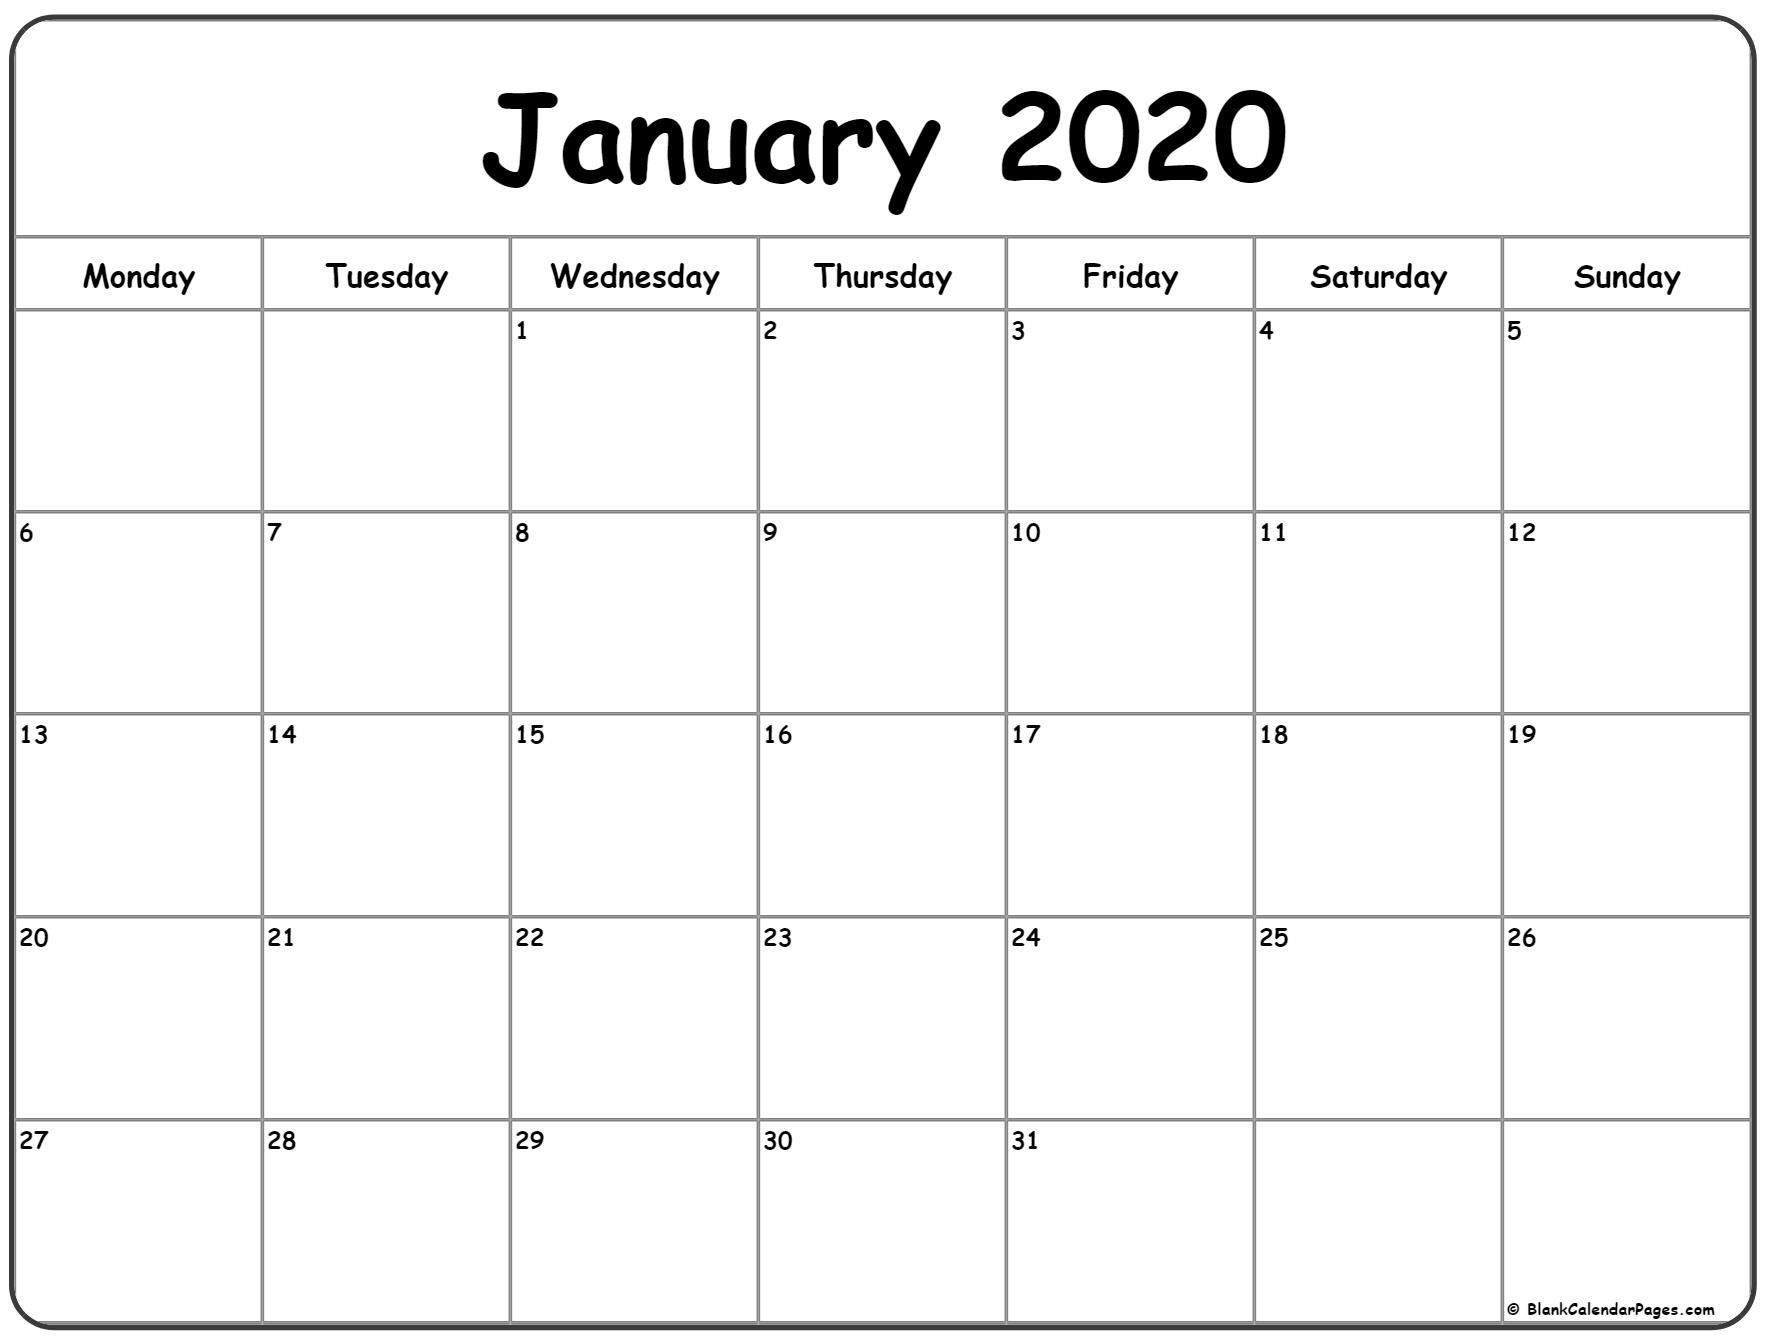 January 2020 Monday Calendar | Monday To Sunday